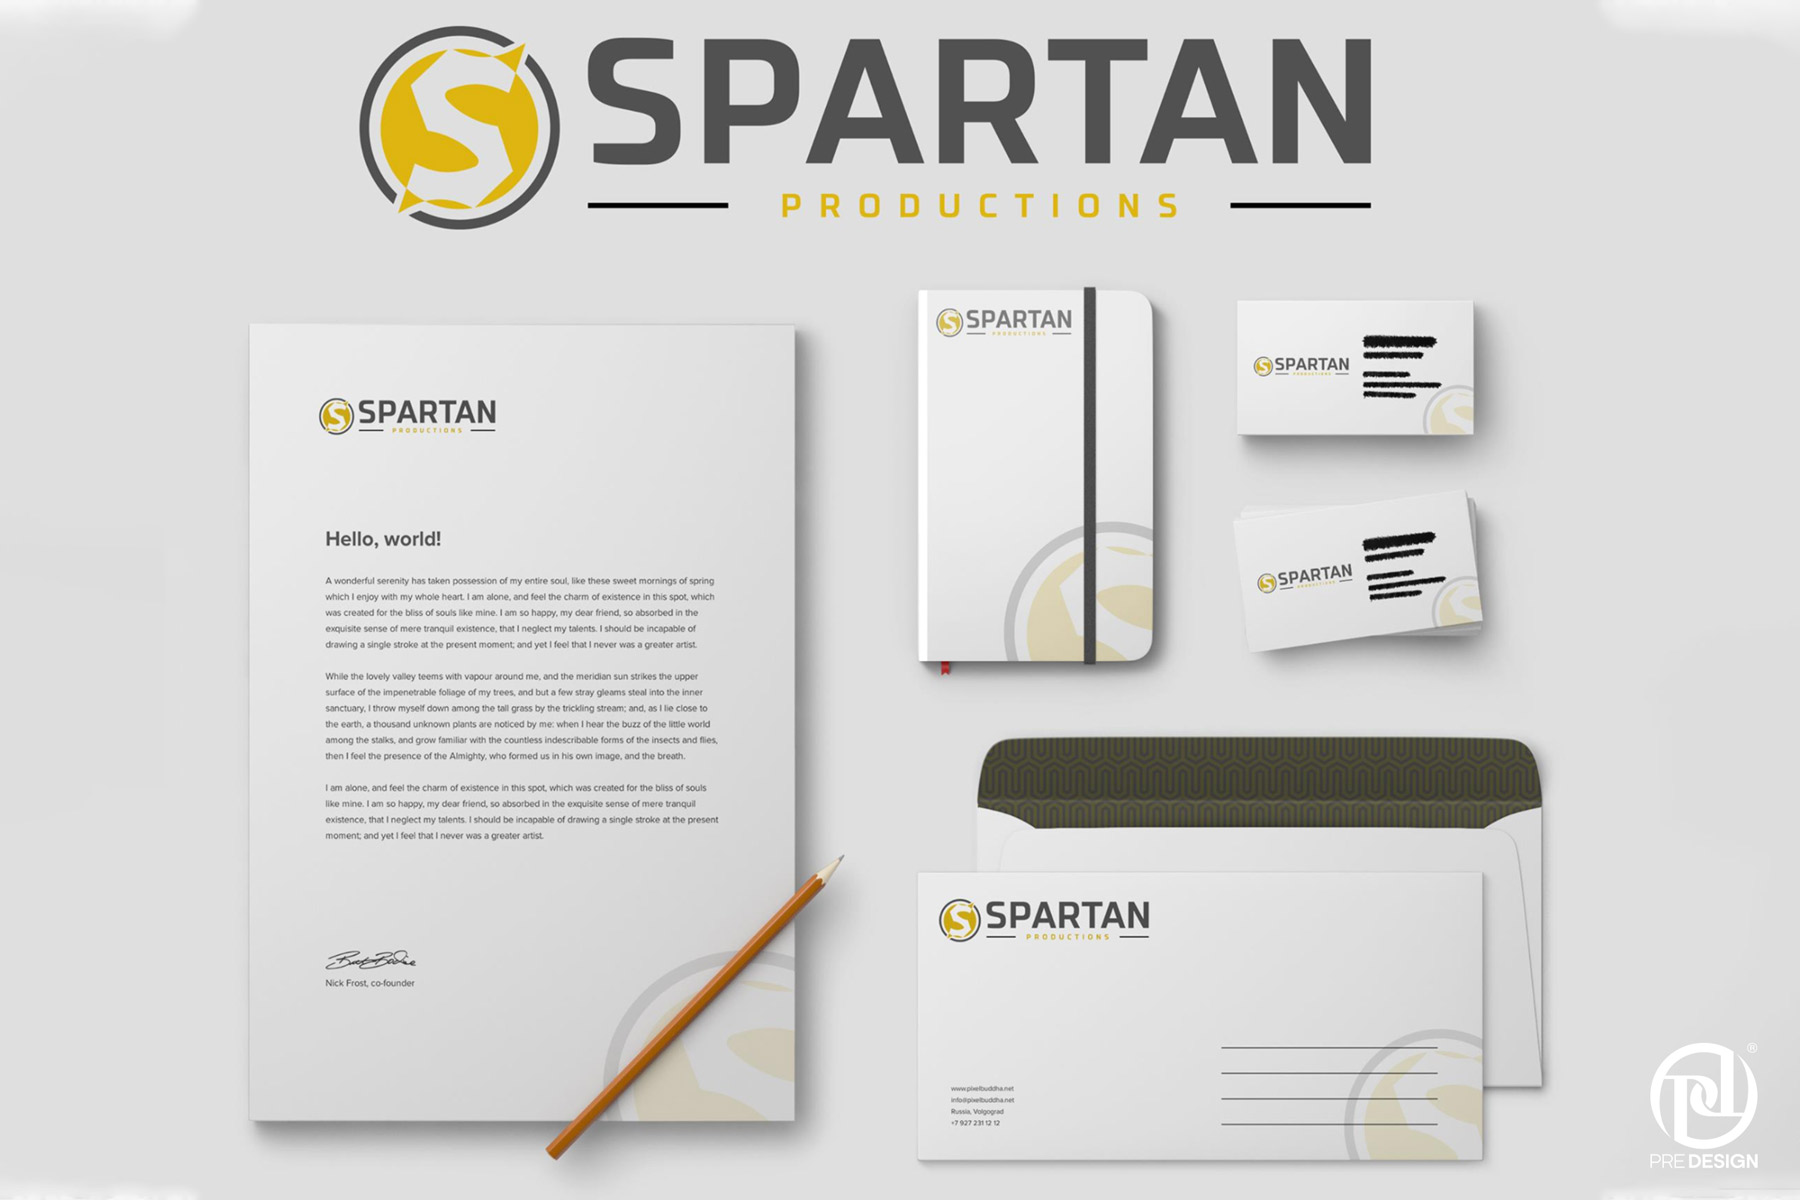 Spartan Production